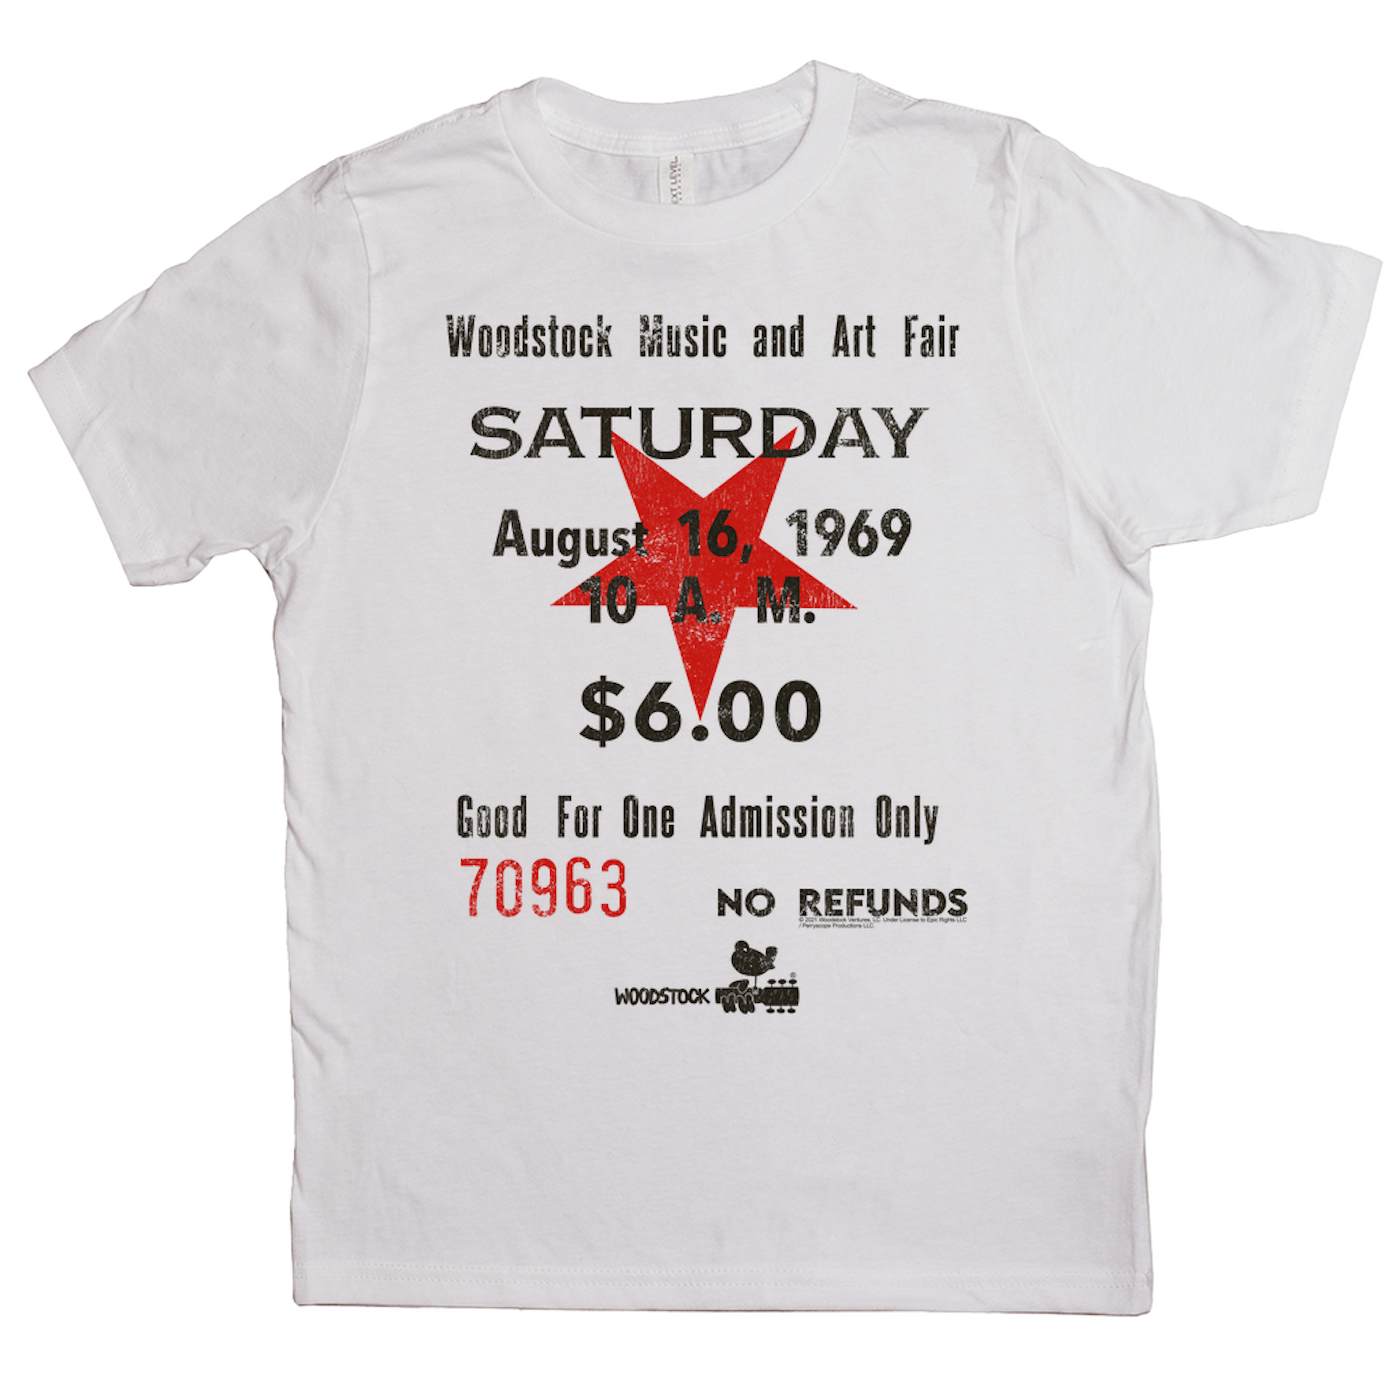 Woodstock Kids T-Shirt | Woodstock Music And Art Fair Ticket Stub Design Woodstock Kids Shirt